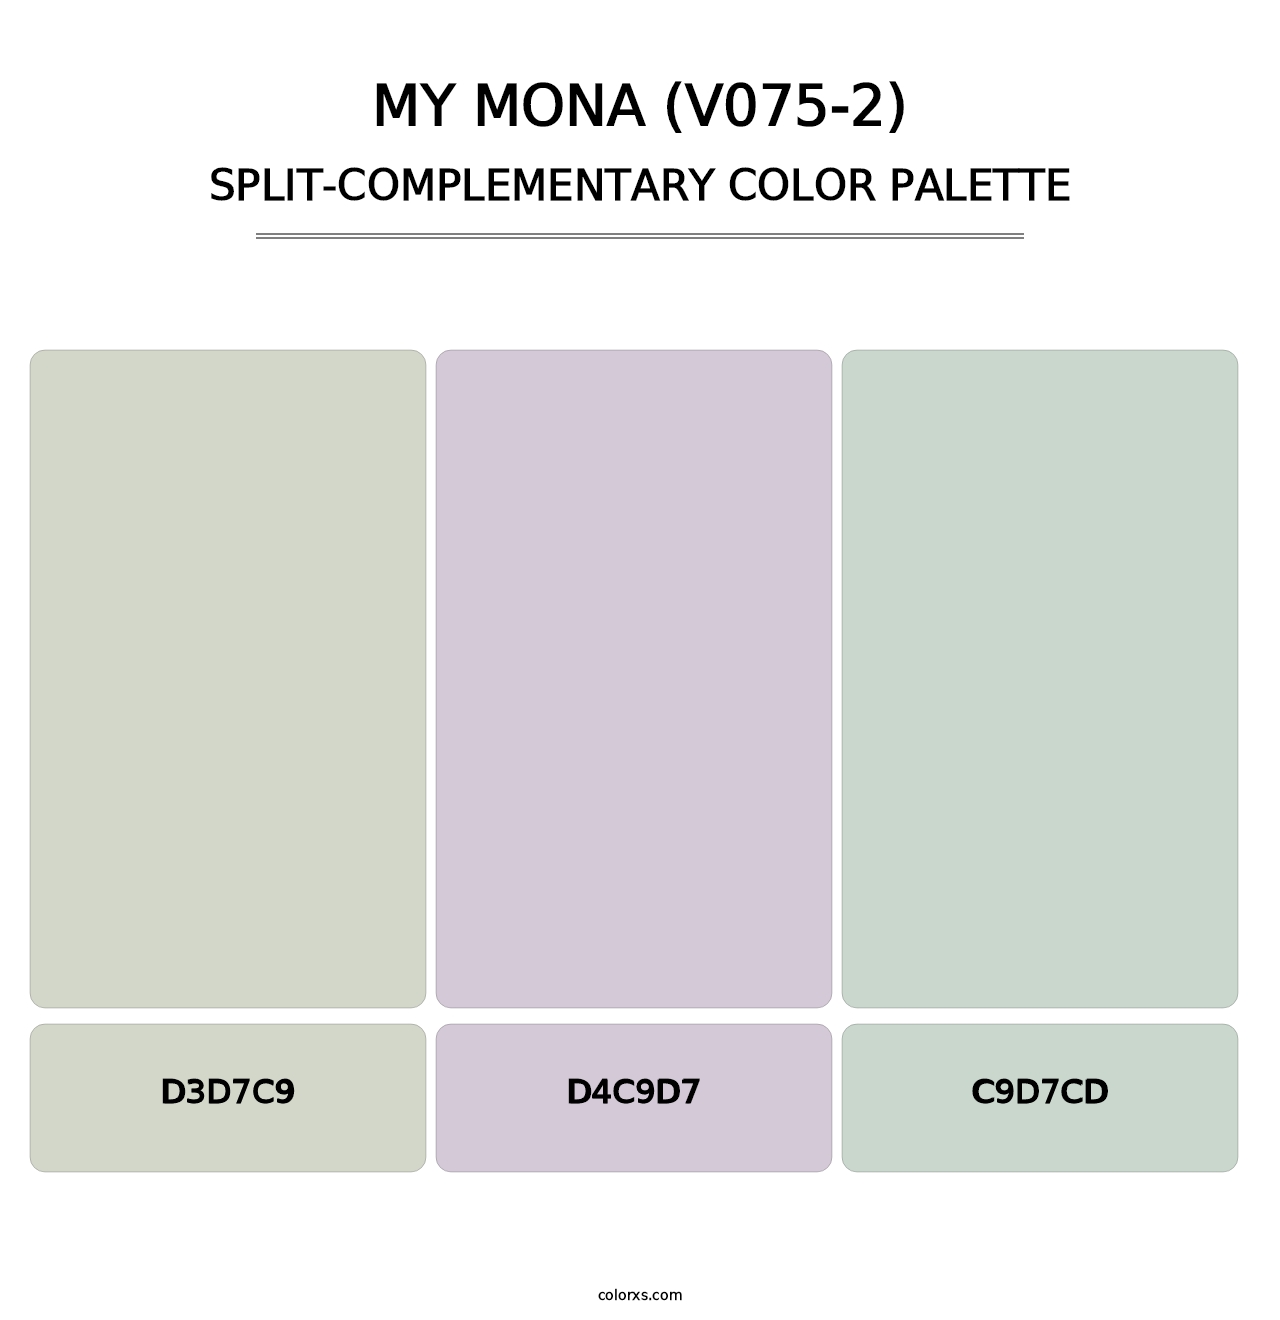 My Mona (V075-2) - Split-Complementary Color Palette